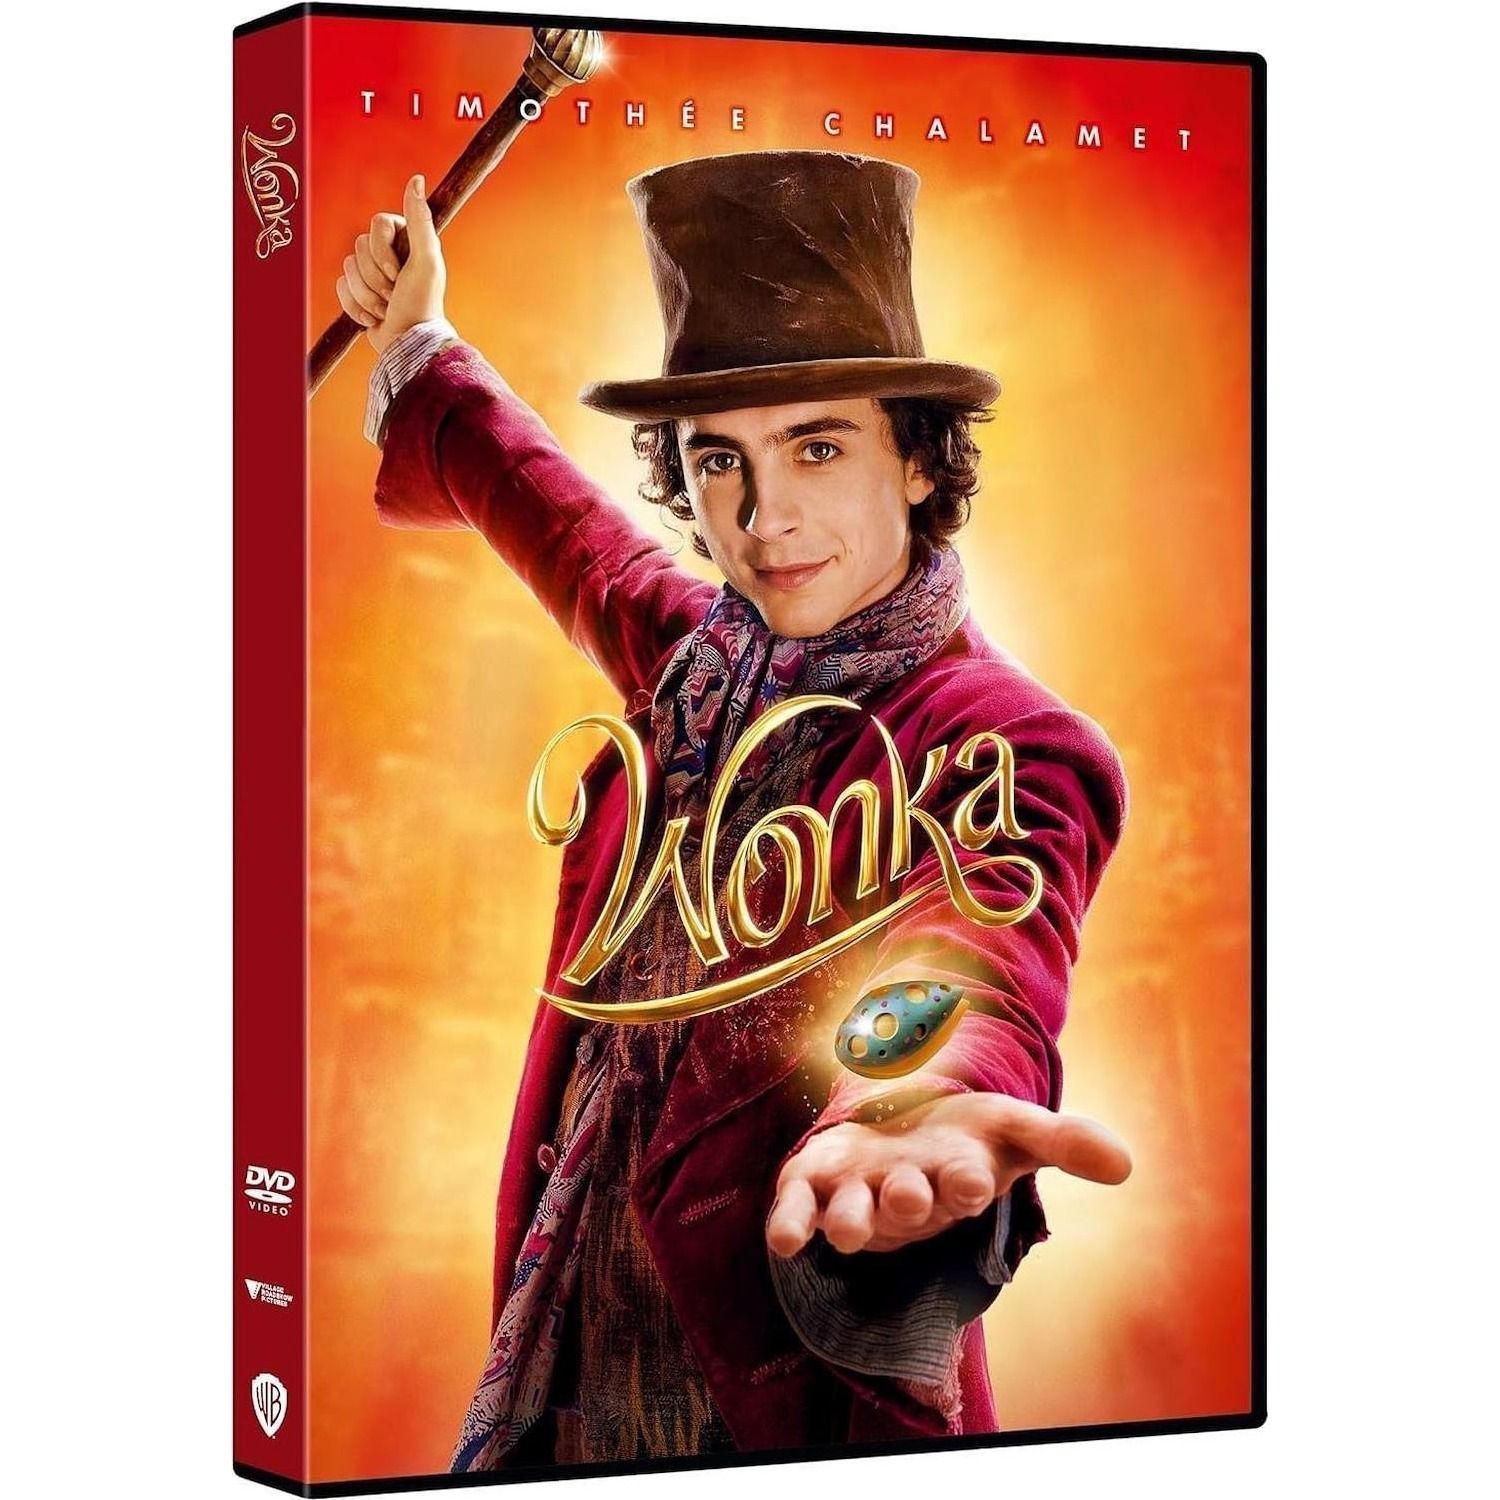 Immagine per DVD Wonka da DIMOStore